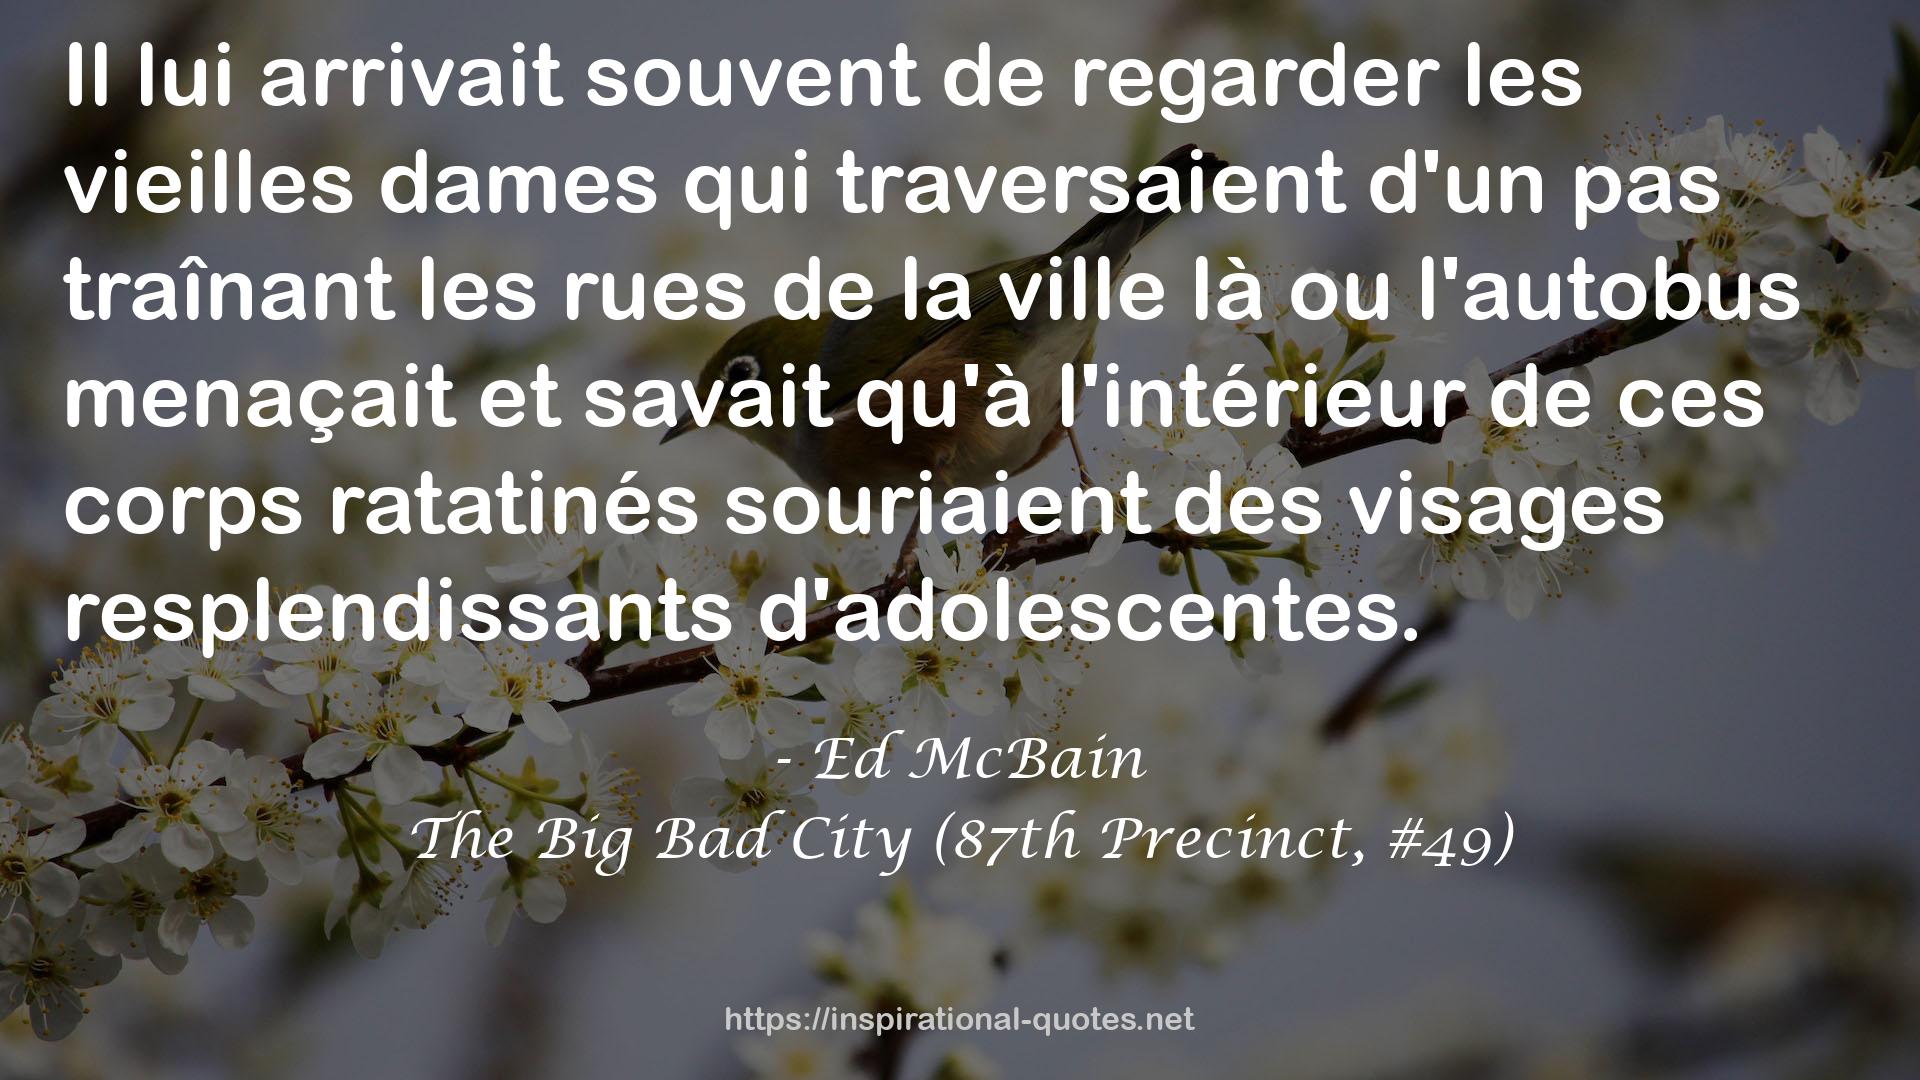 The Big Bad City (87th Precinct, #49) QUOTES